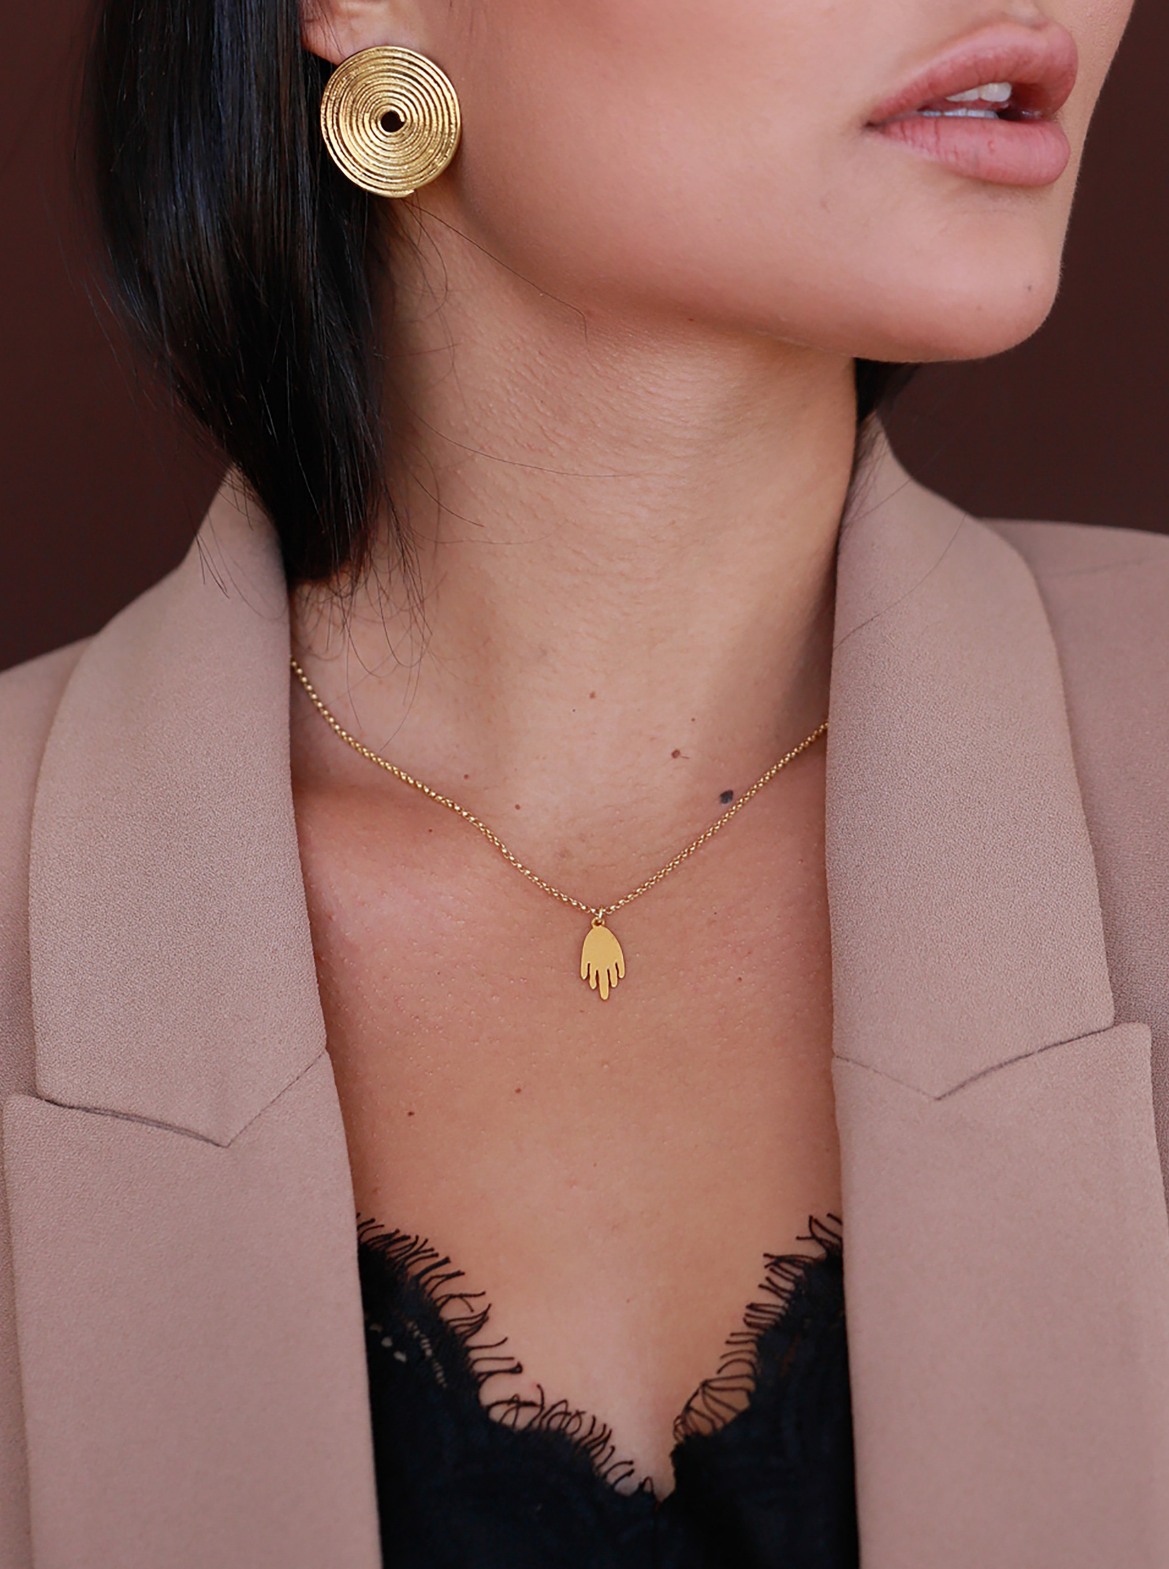 Minimalist Hamsa Hand Gold Plated Necklace | Handmade Pendant | Ebru Jewelry